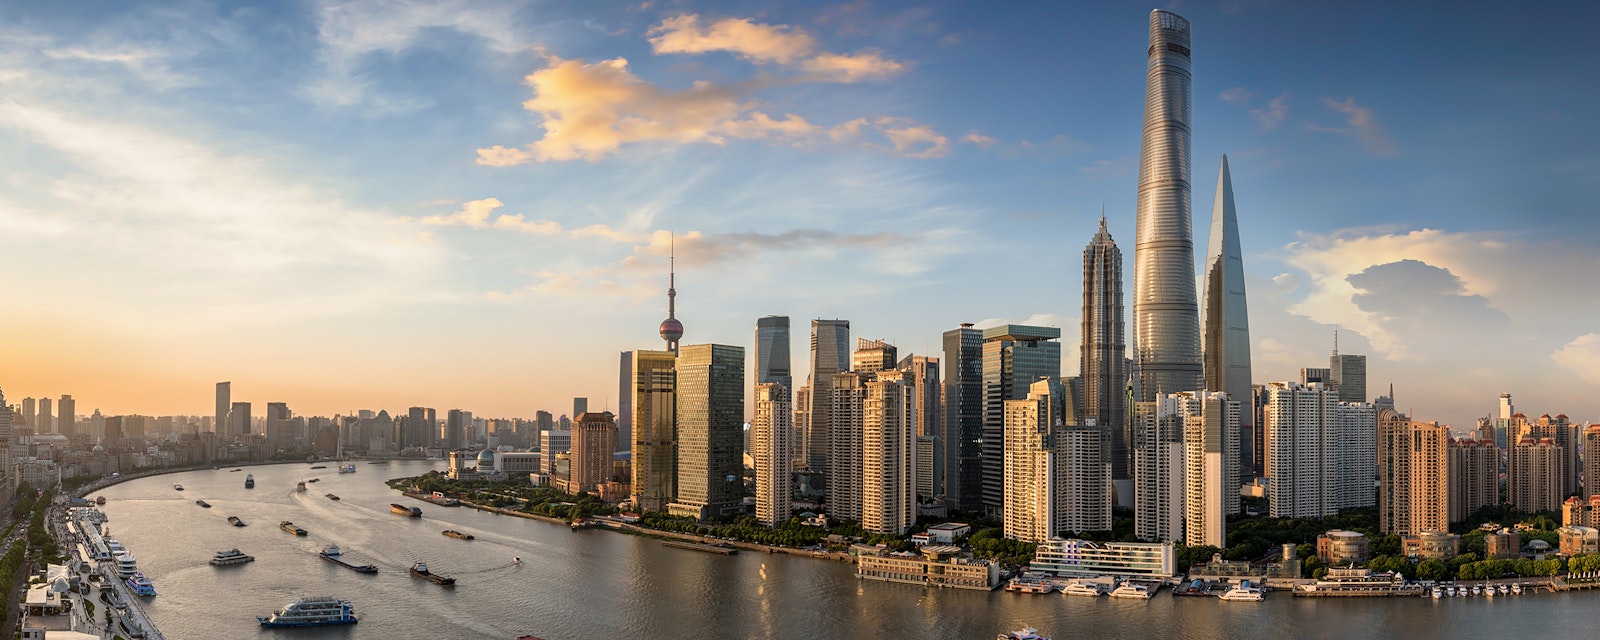 Cityscape of Shanghai City